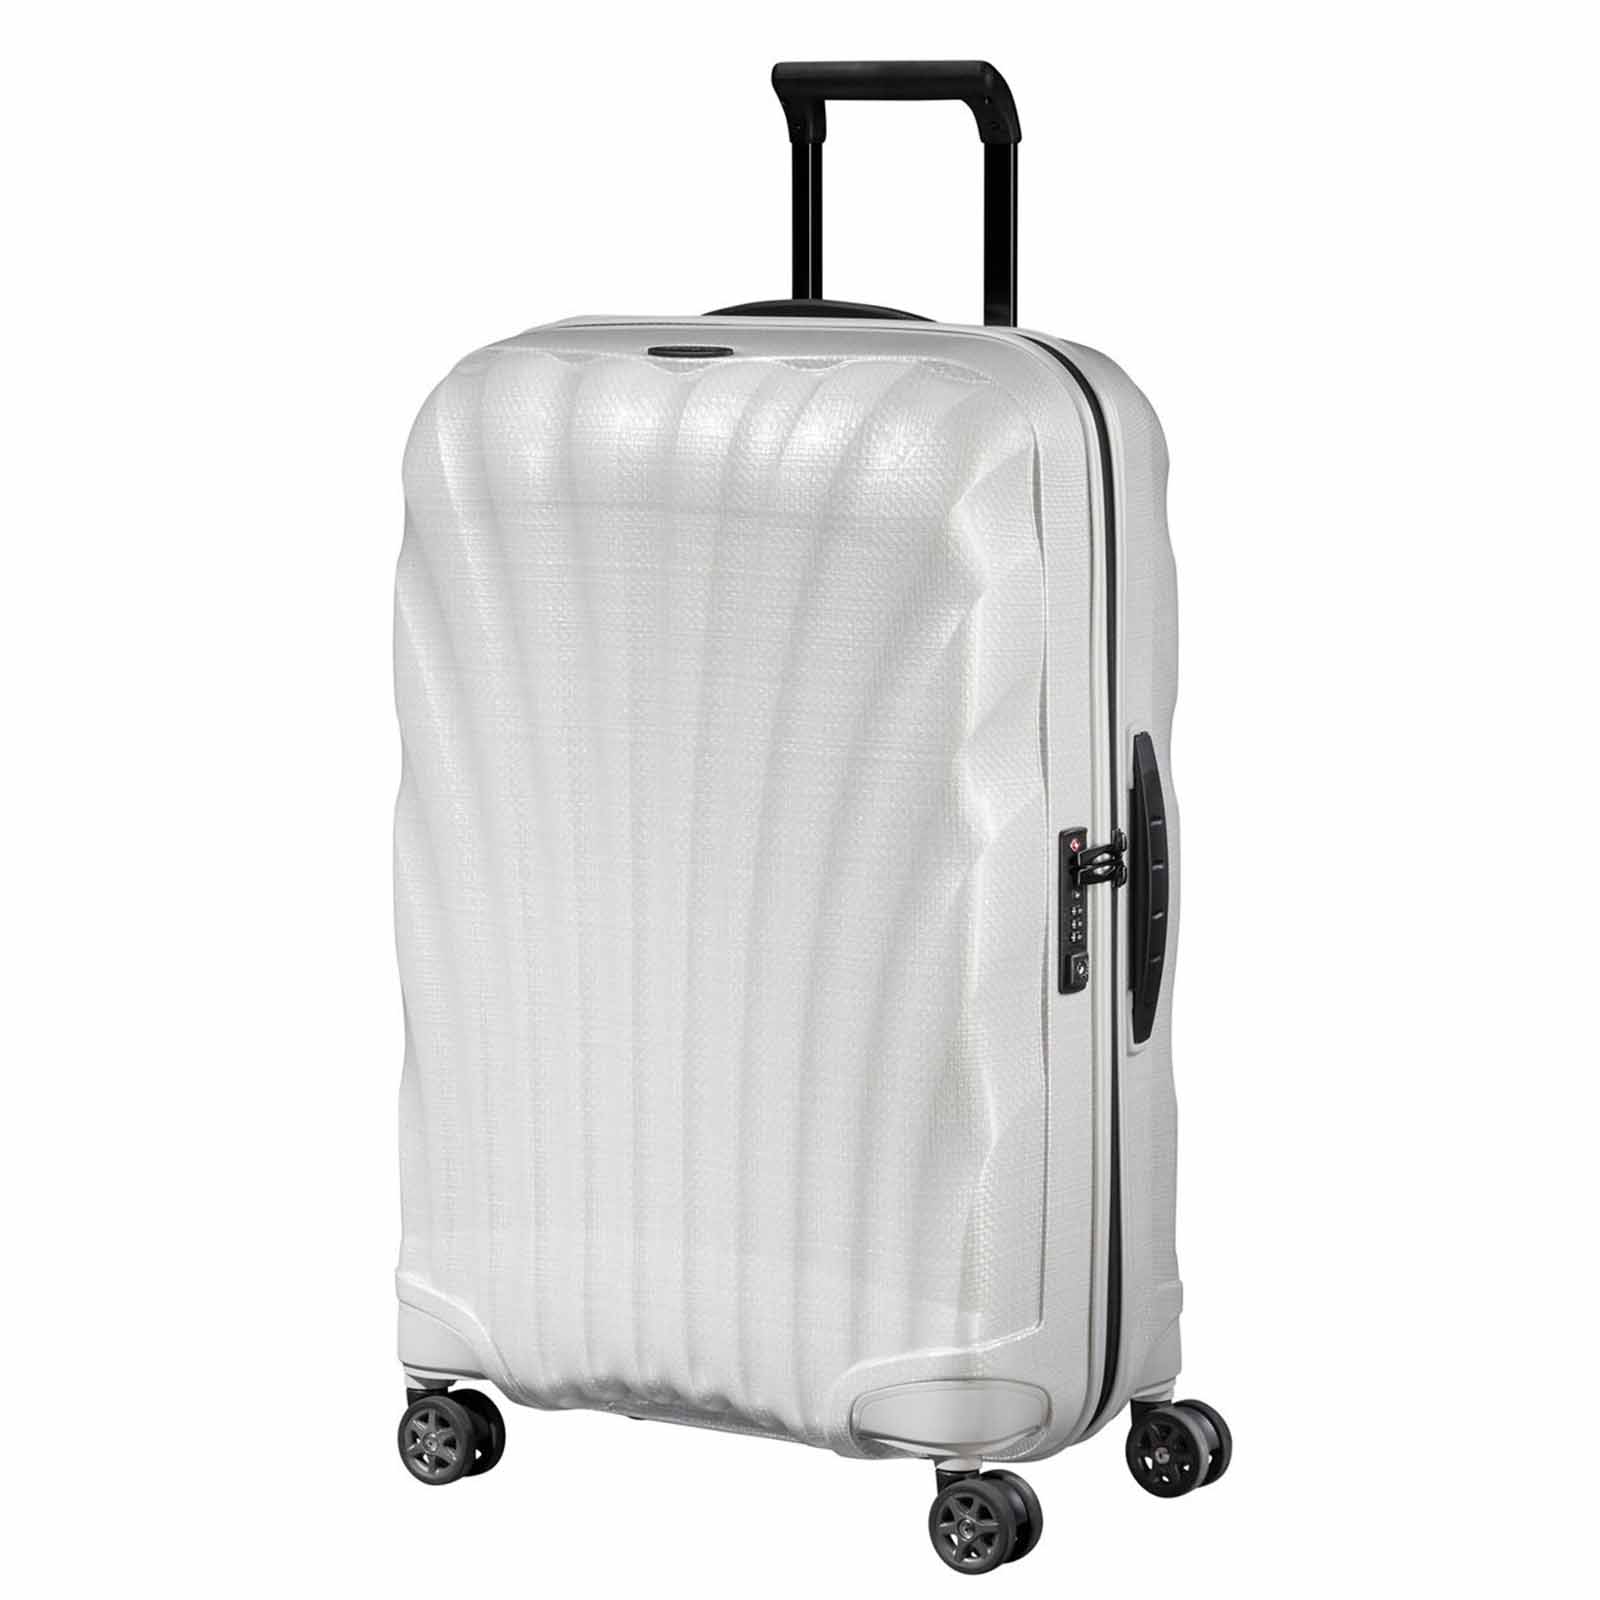 Samsonite-C-Lite-69cm-Suitcase-Midnight-Off-White-Front-Angle